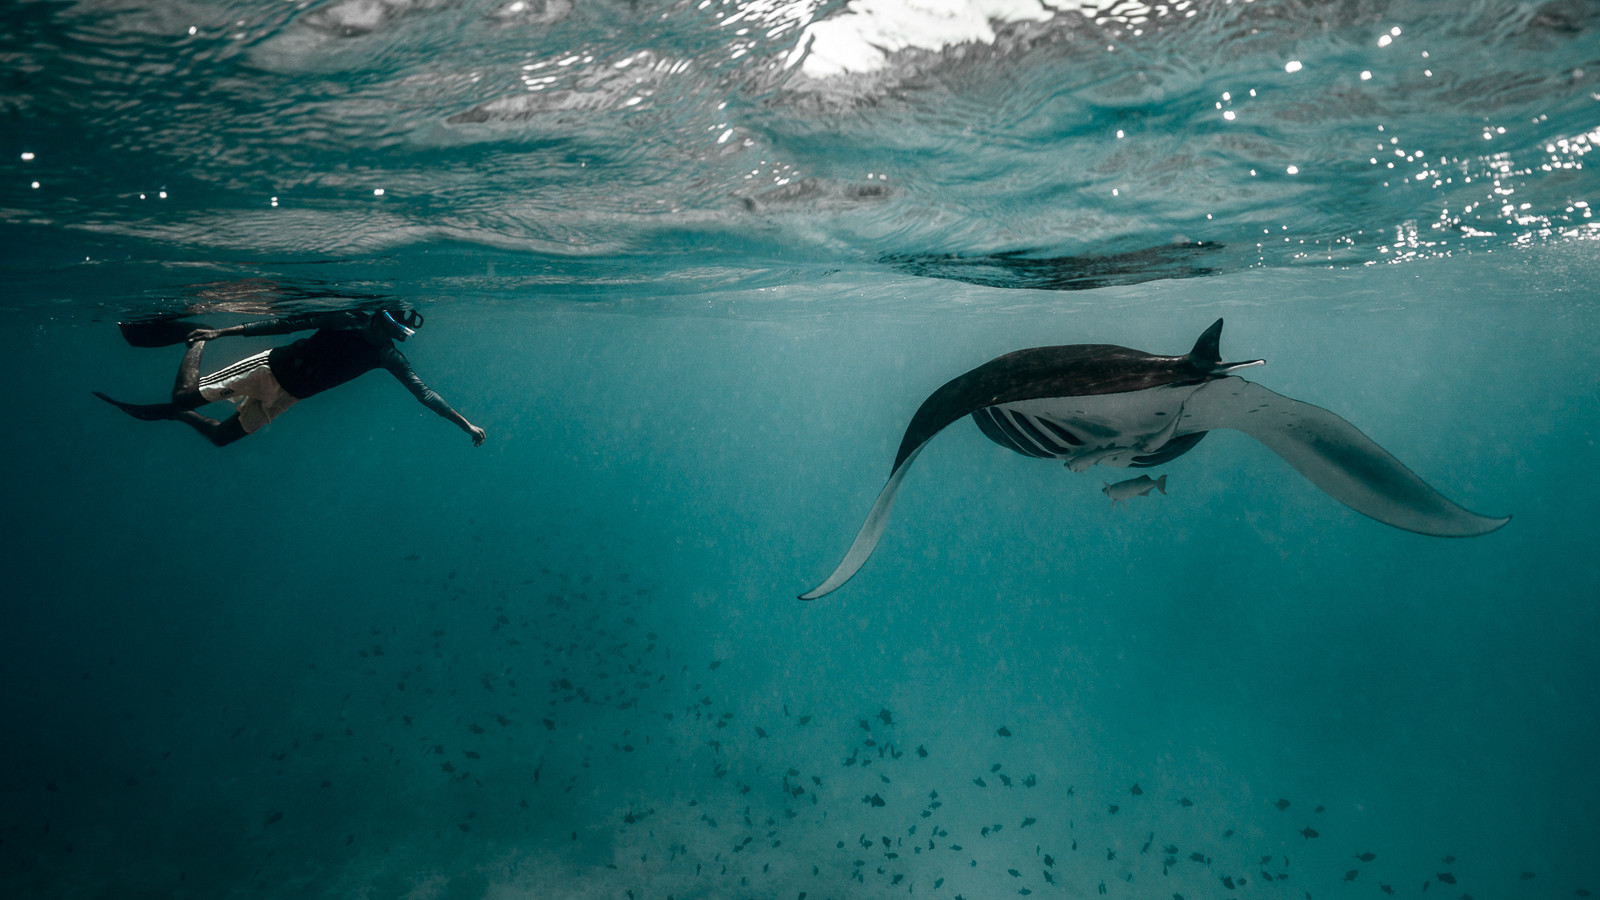 Amazing underwater photos captured by Vietnamese photographer